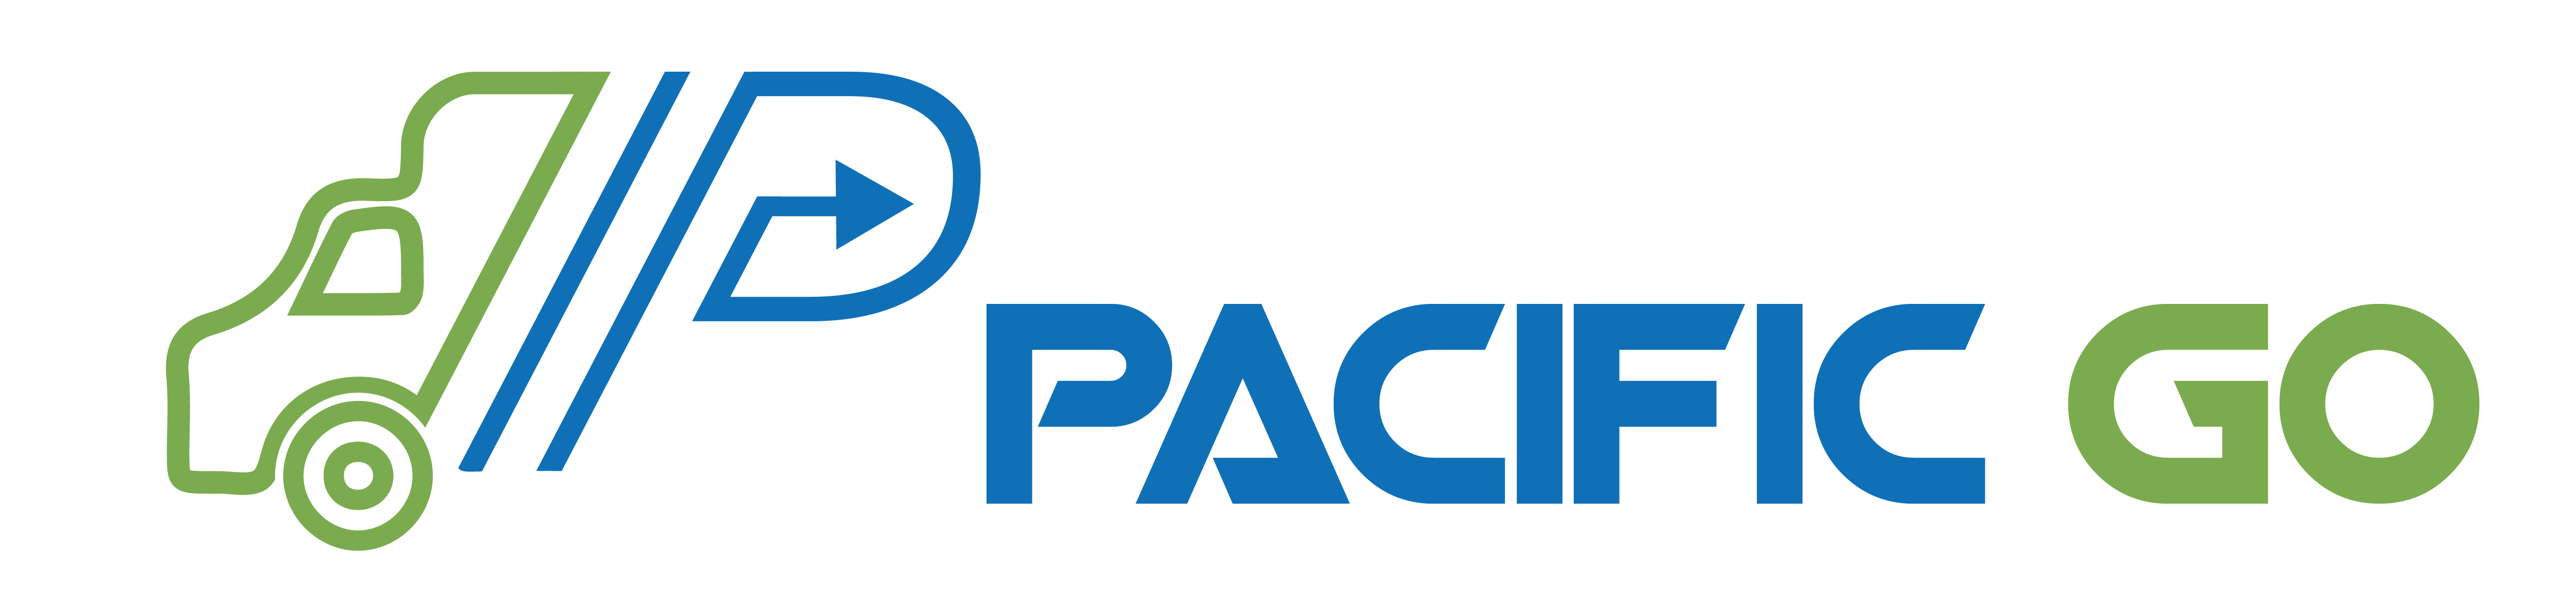 Pacific Go